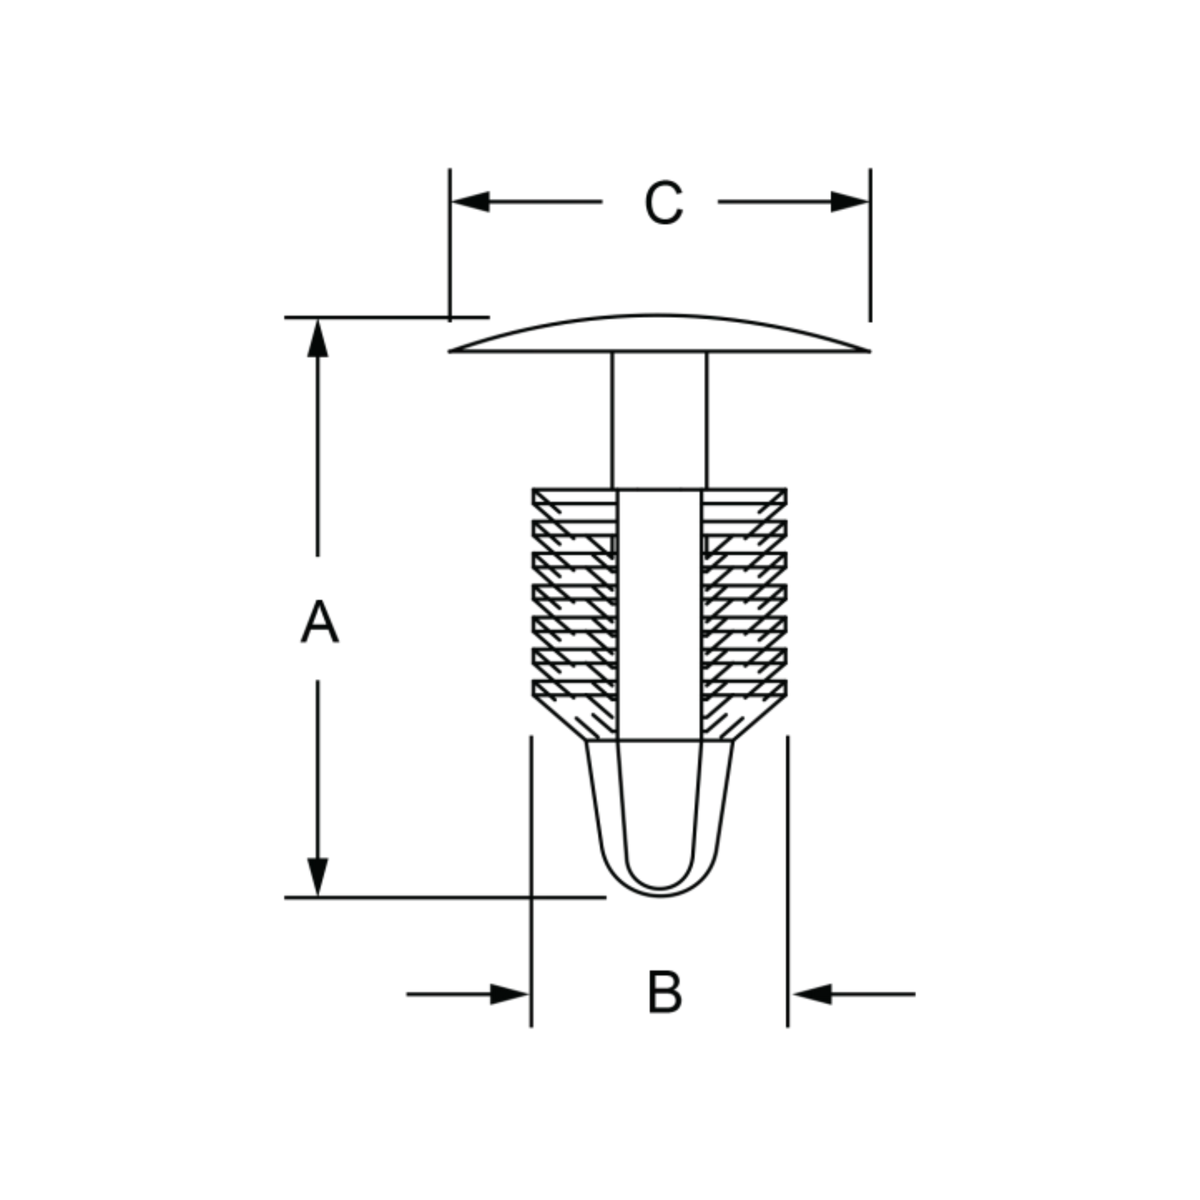 diagram of a push-in fastener